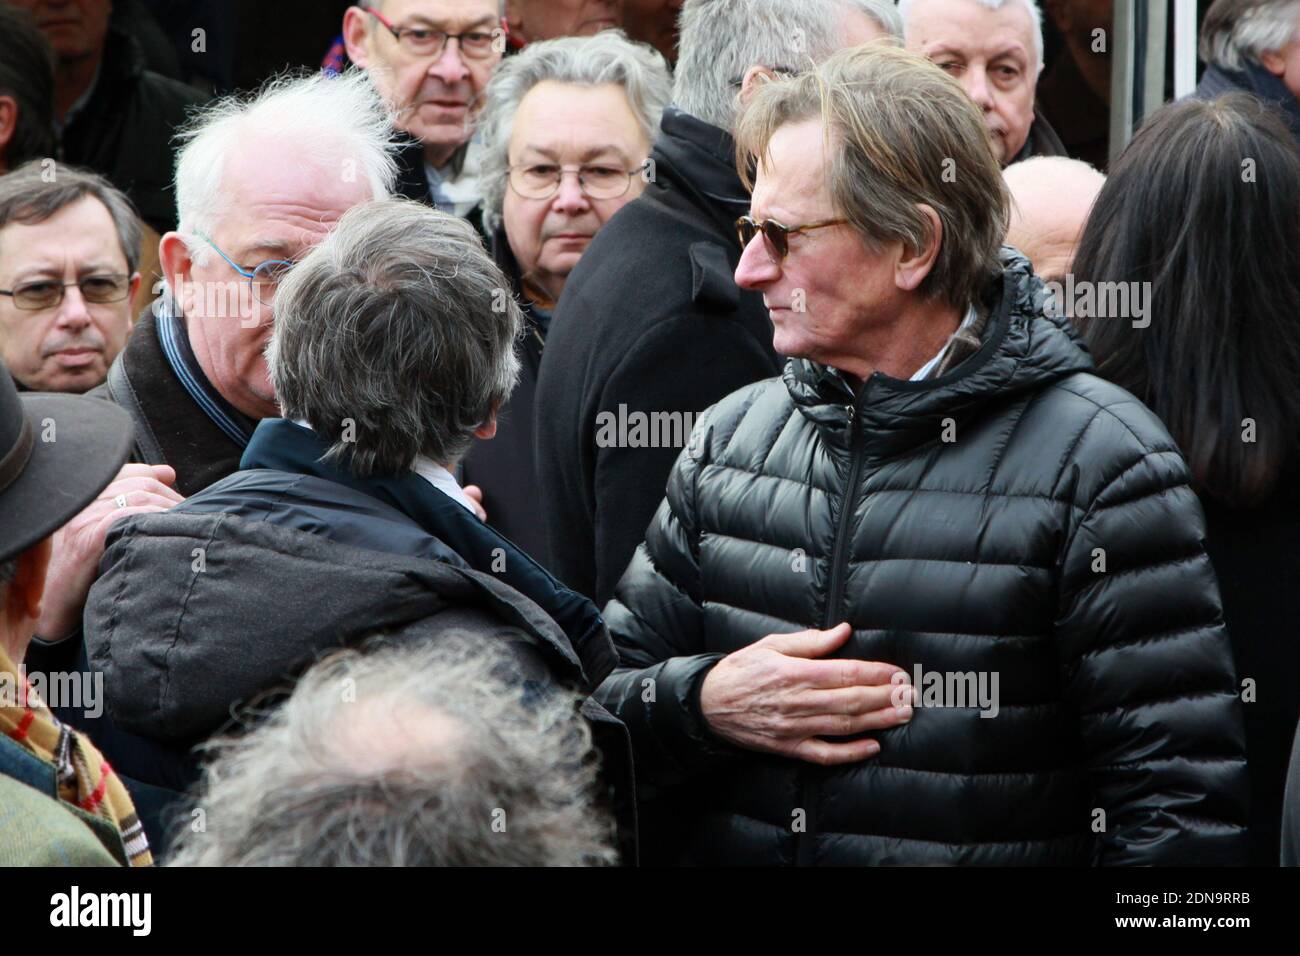 Jean-Pierre Jabouille attending the Jean-Pierre Beltoise funeral ceremony  in Saint-Vrain, France on January 12, 2015. Photo by ABACAPRESS.COM Stock  Photo - Alamy